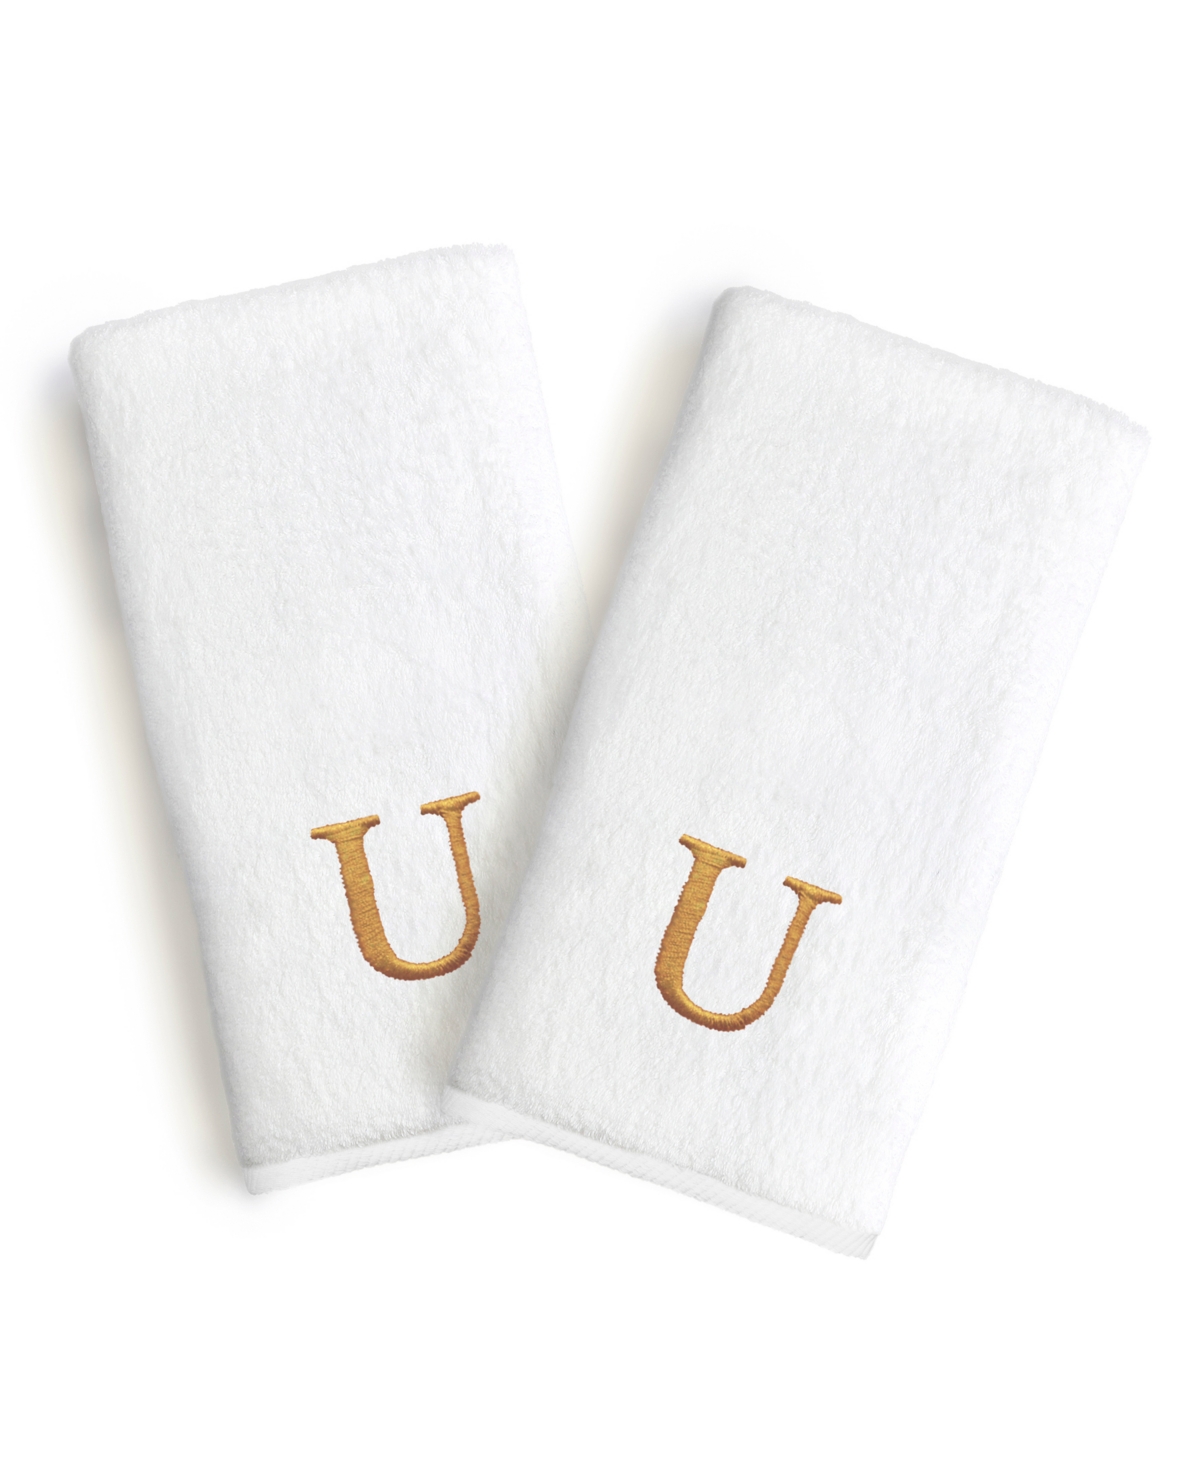 Linum Home Bookman Gold Font Monogrammed Luxury 100% Turkish Cotton Novelty 2-piece Hand Towels, 16" X 30" Bedd In Gold - U